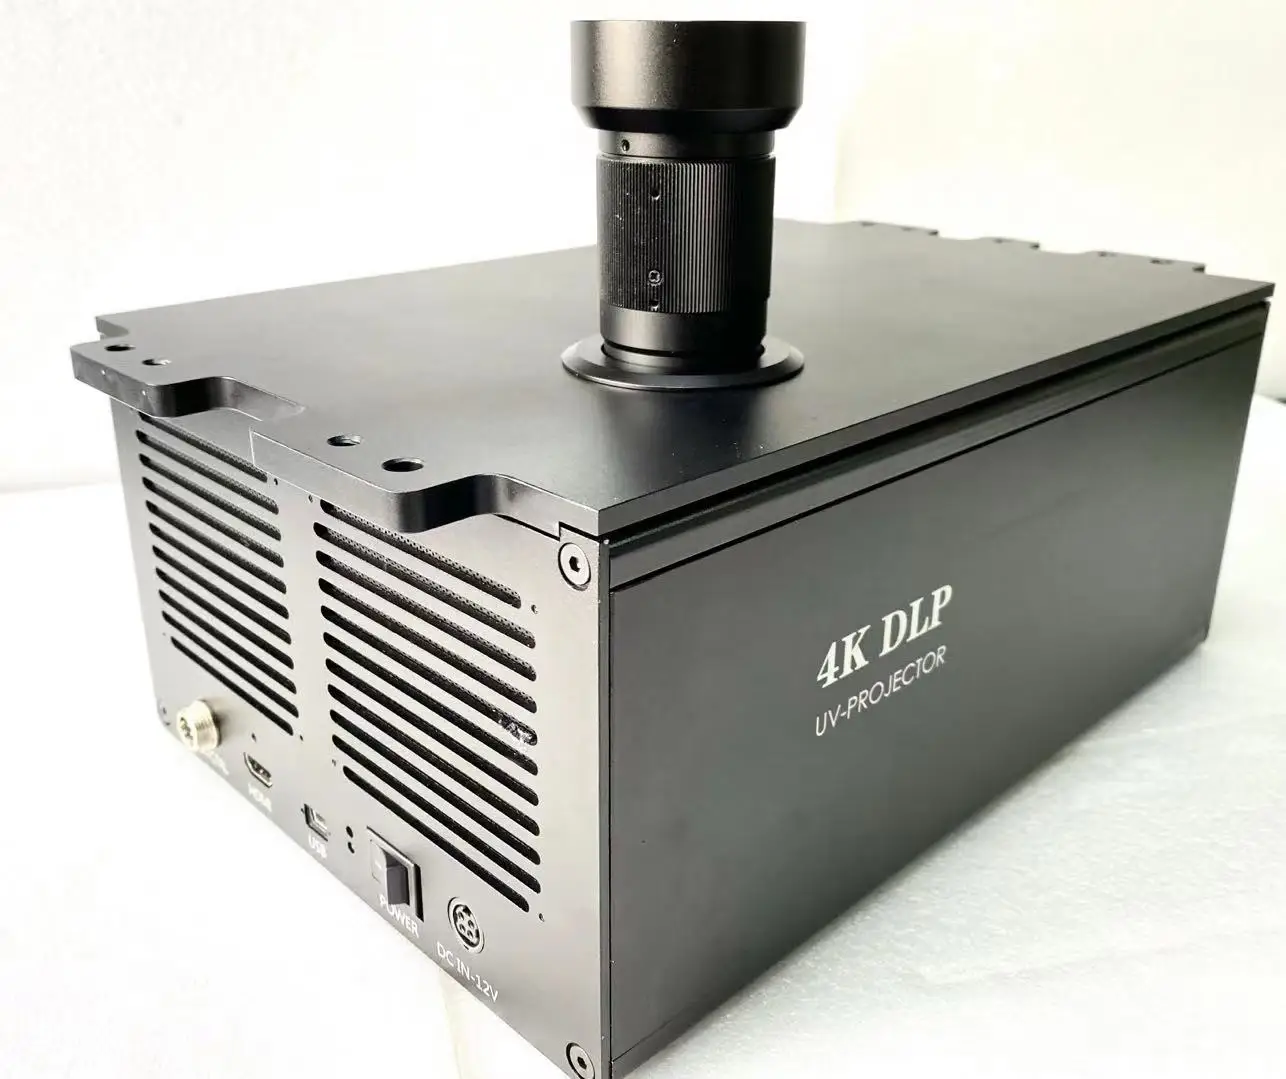 

IT DLP4710 1280*800 DLP UV light engine dlp optical engine projector for DLP 3d printer and 3d scanning